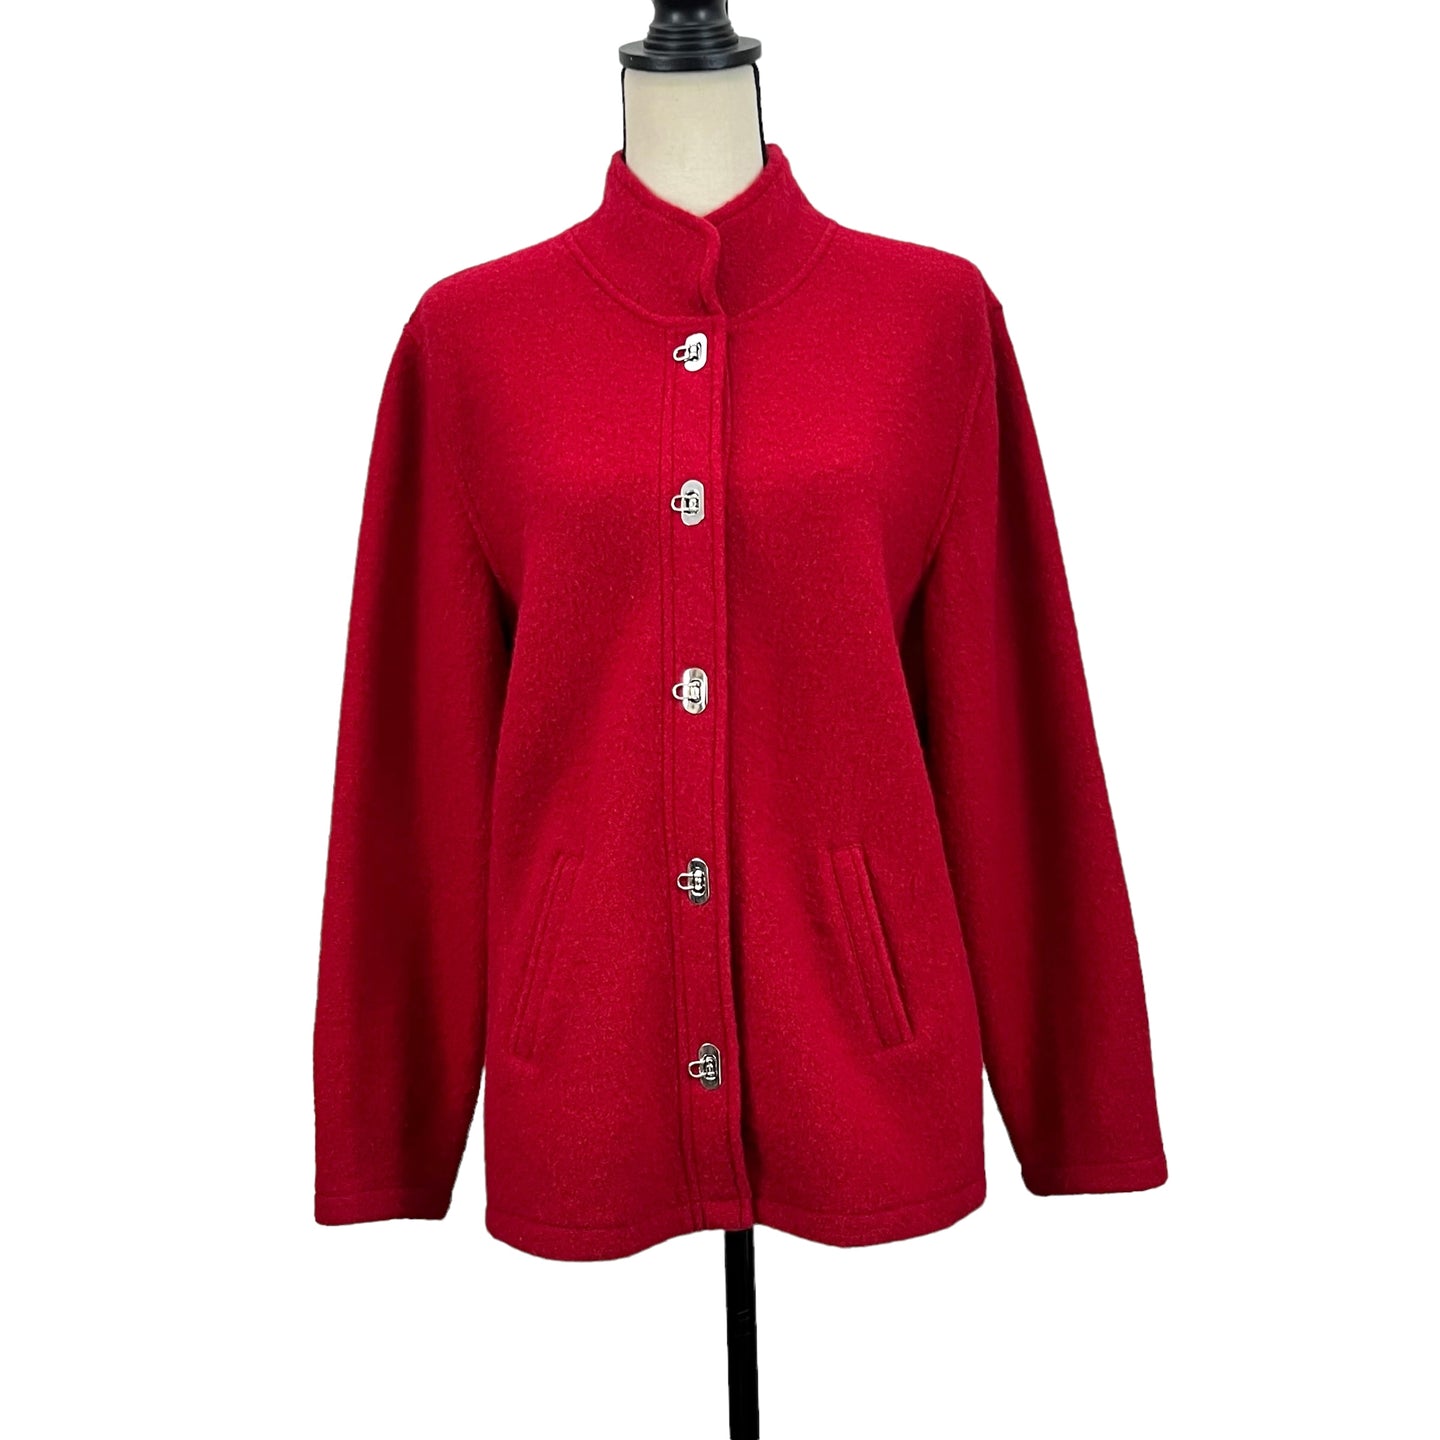 Vintage Talbots Petites Red Wool Sweater Jacket Size Medium